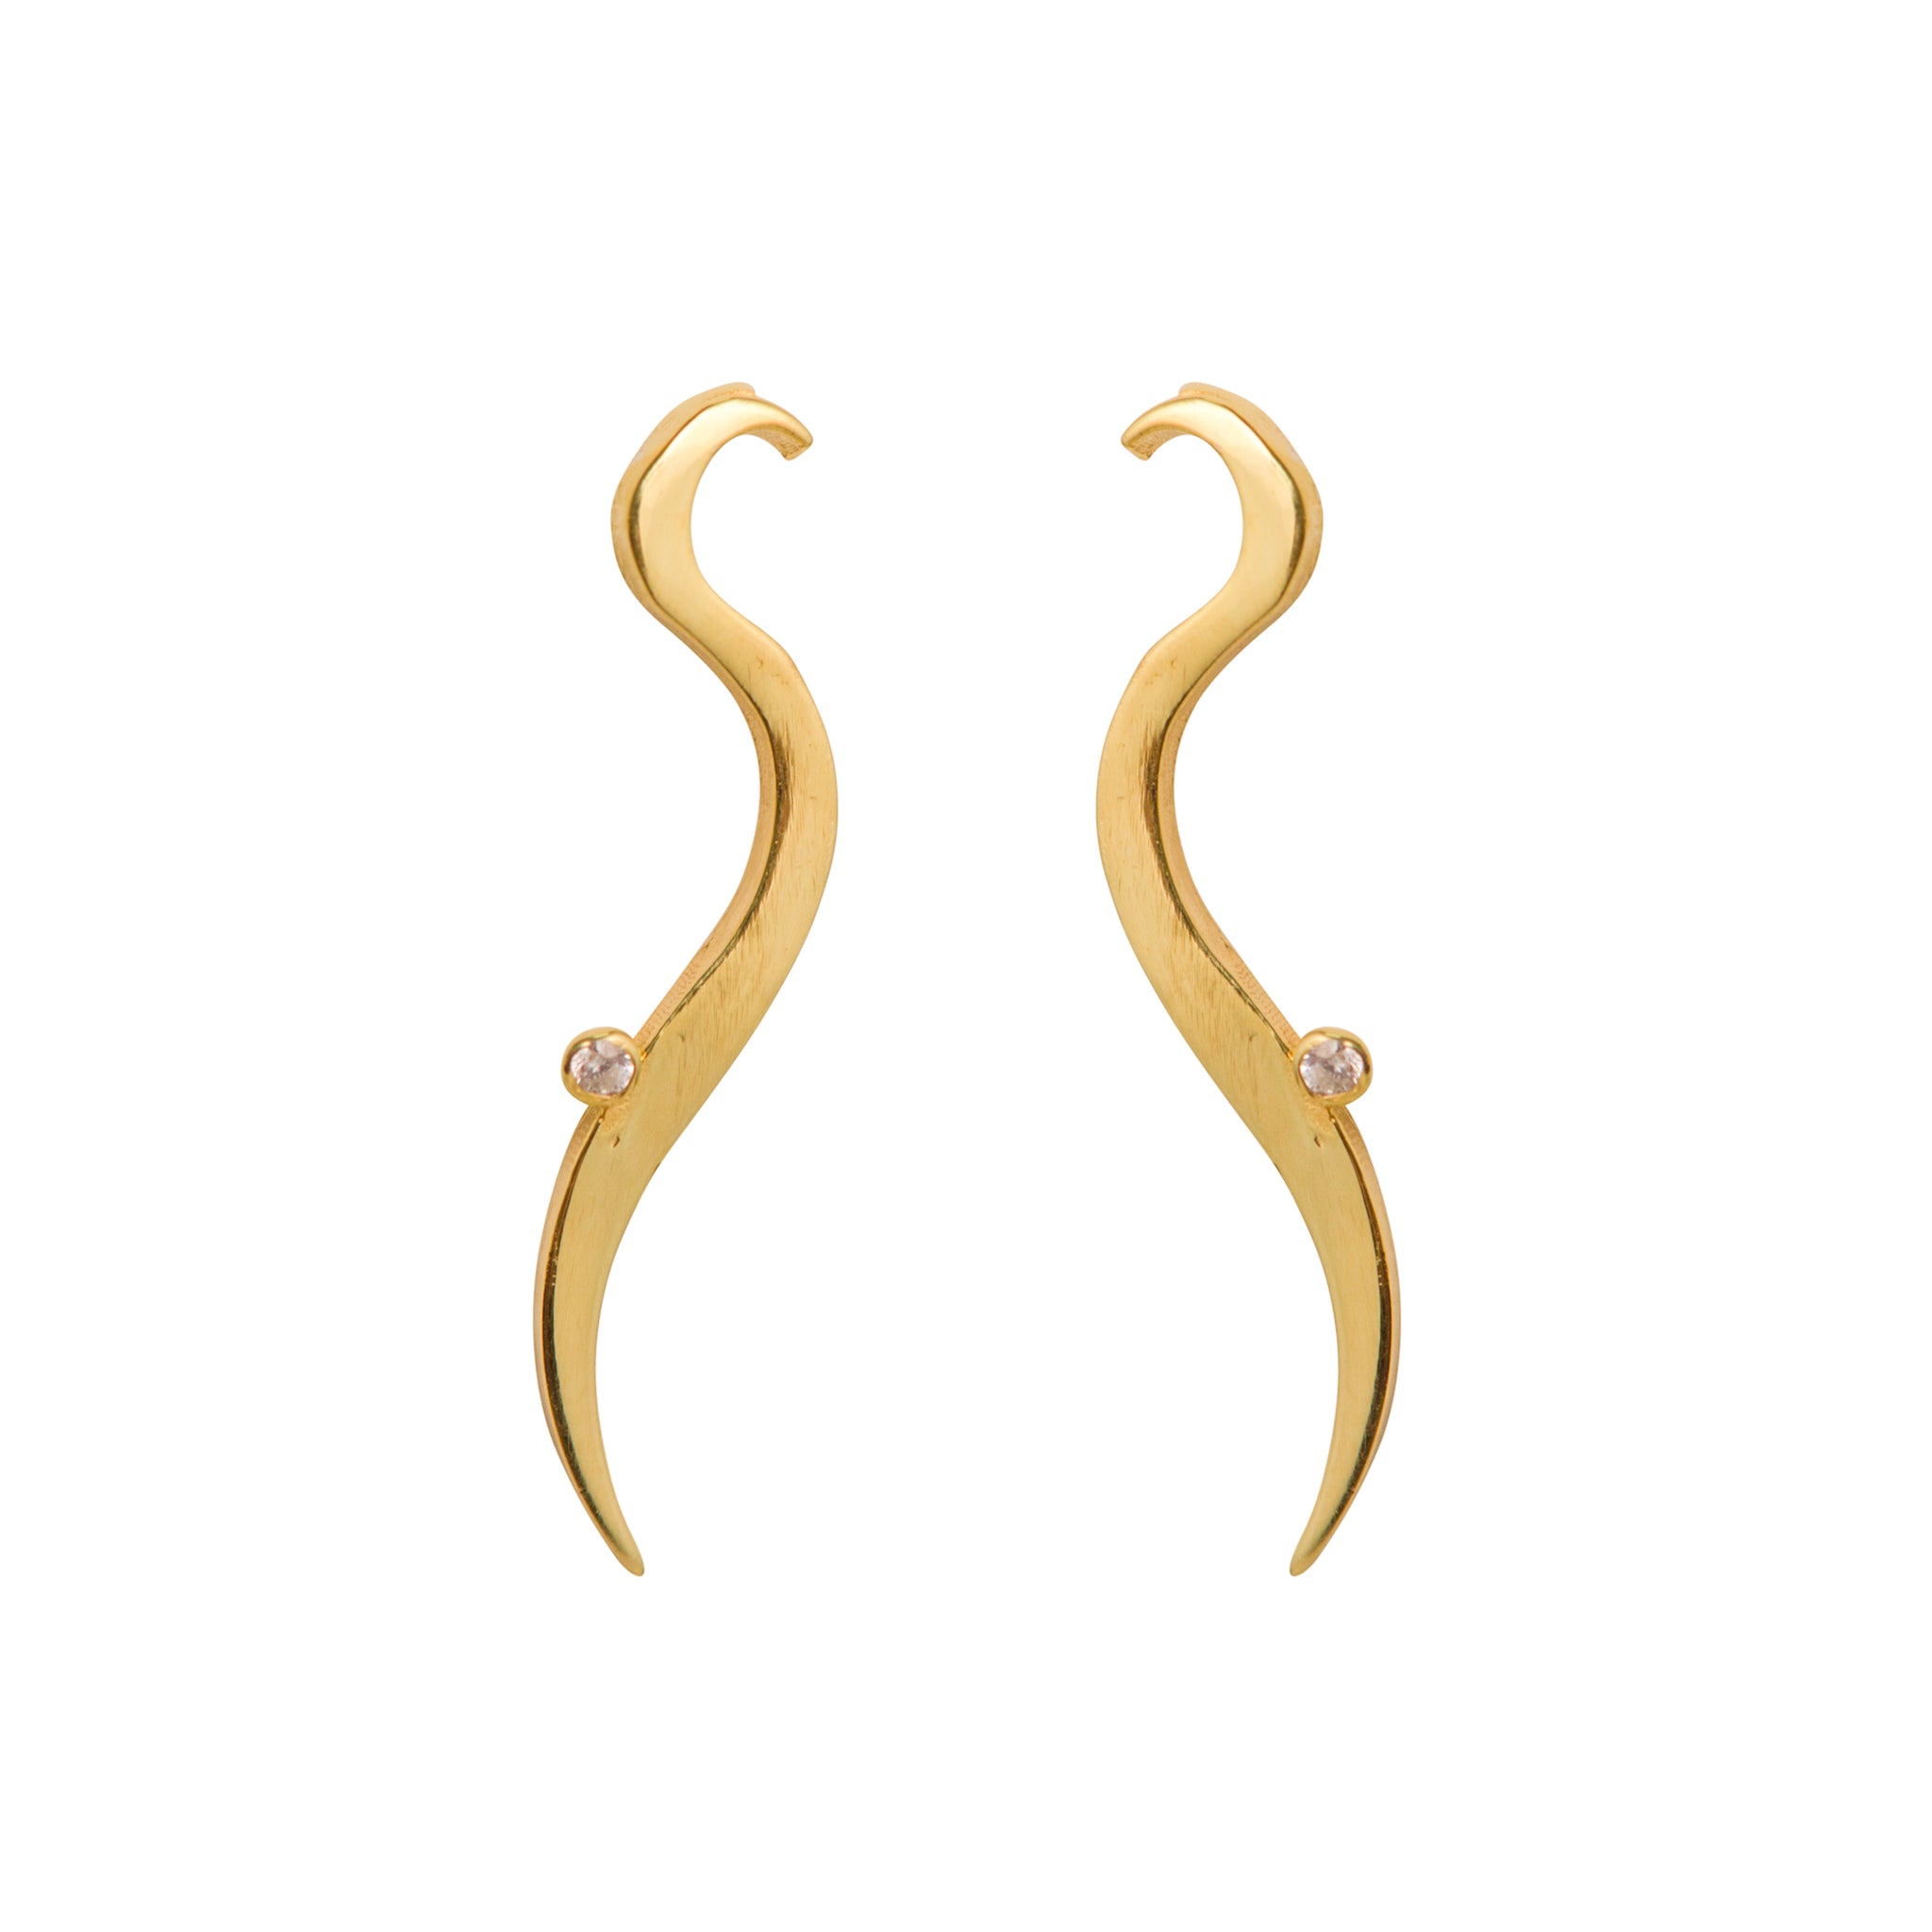 Simplicity Curved Line Zircon Stud Earrings